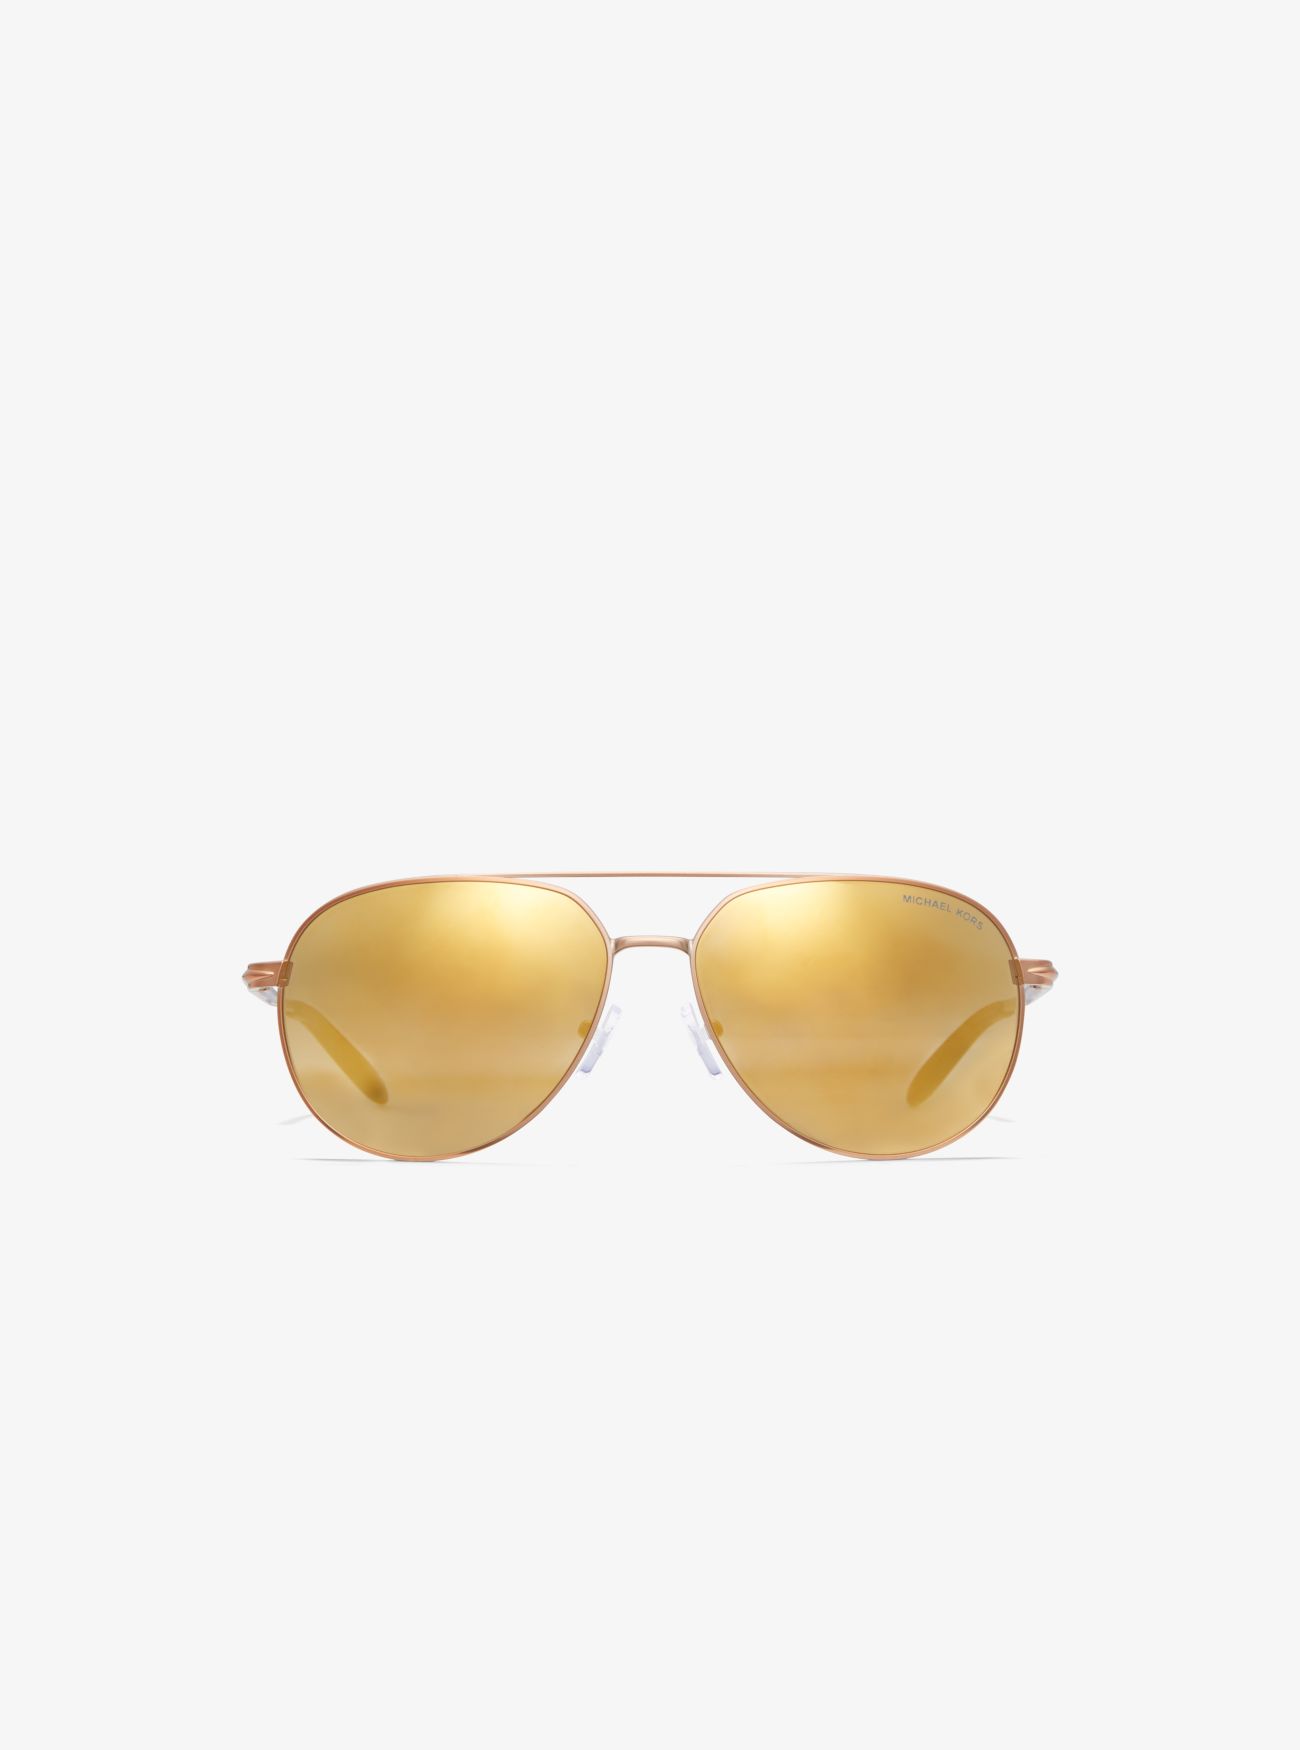 MK Highlands Sunglasses - Natural - Michael Kors